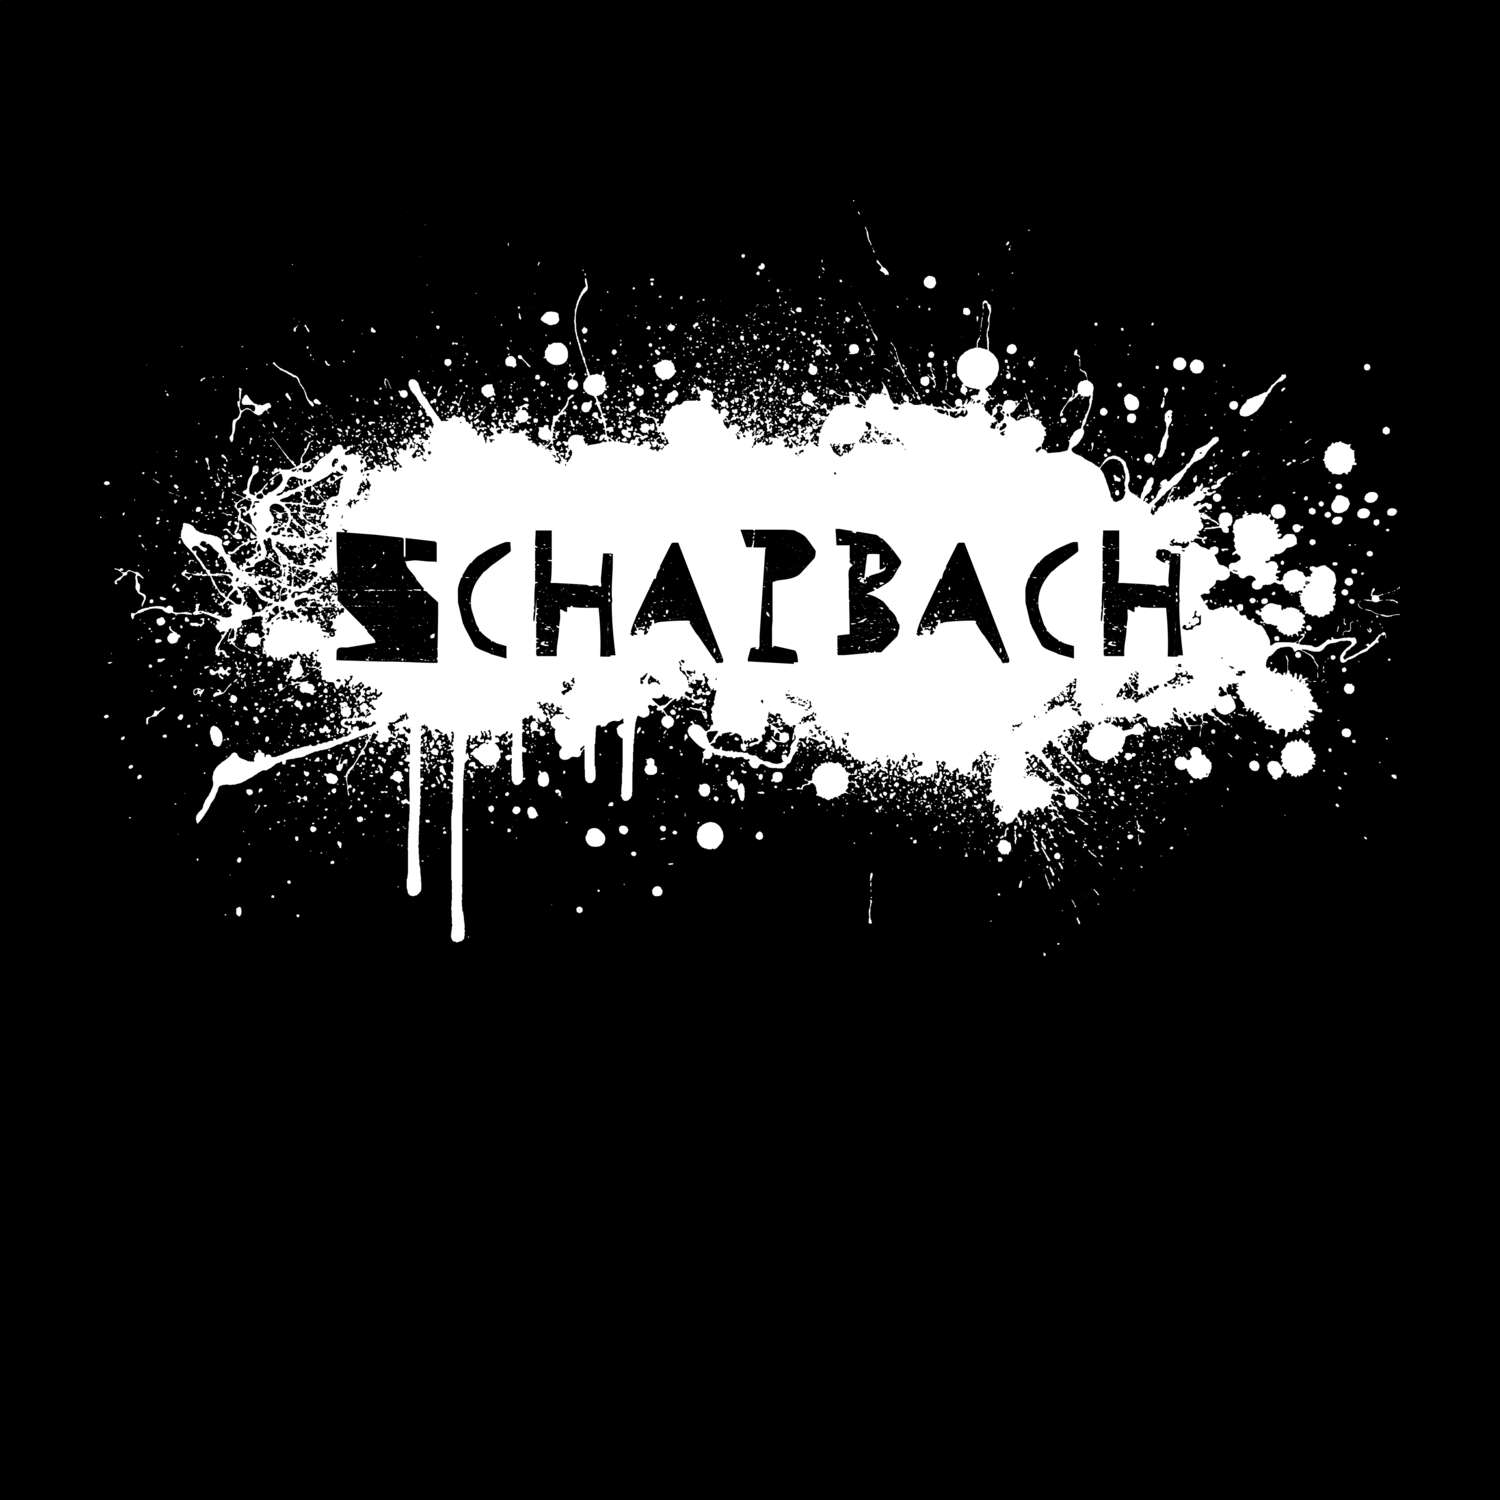 Schapbach T-Shirt »Paint Splash Punk«